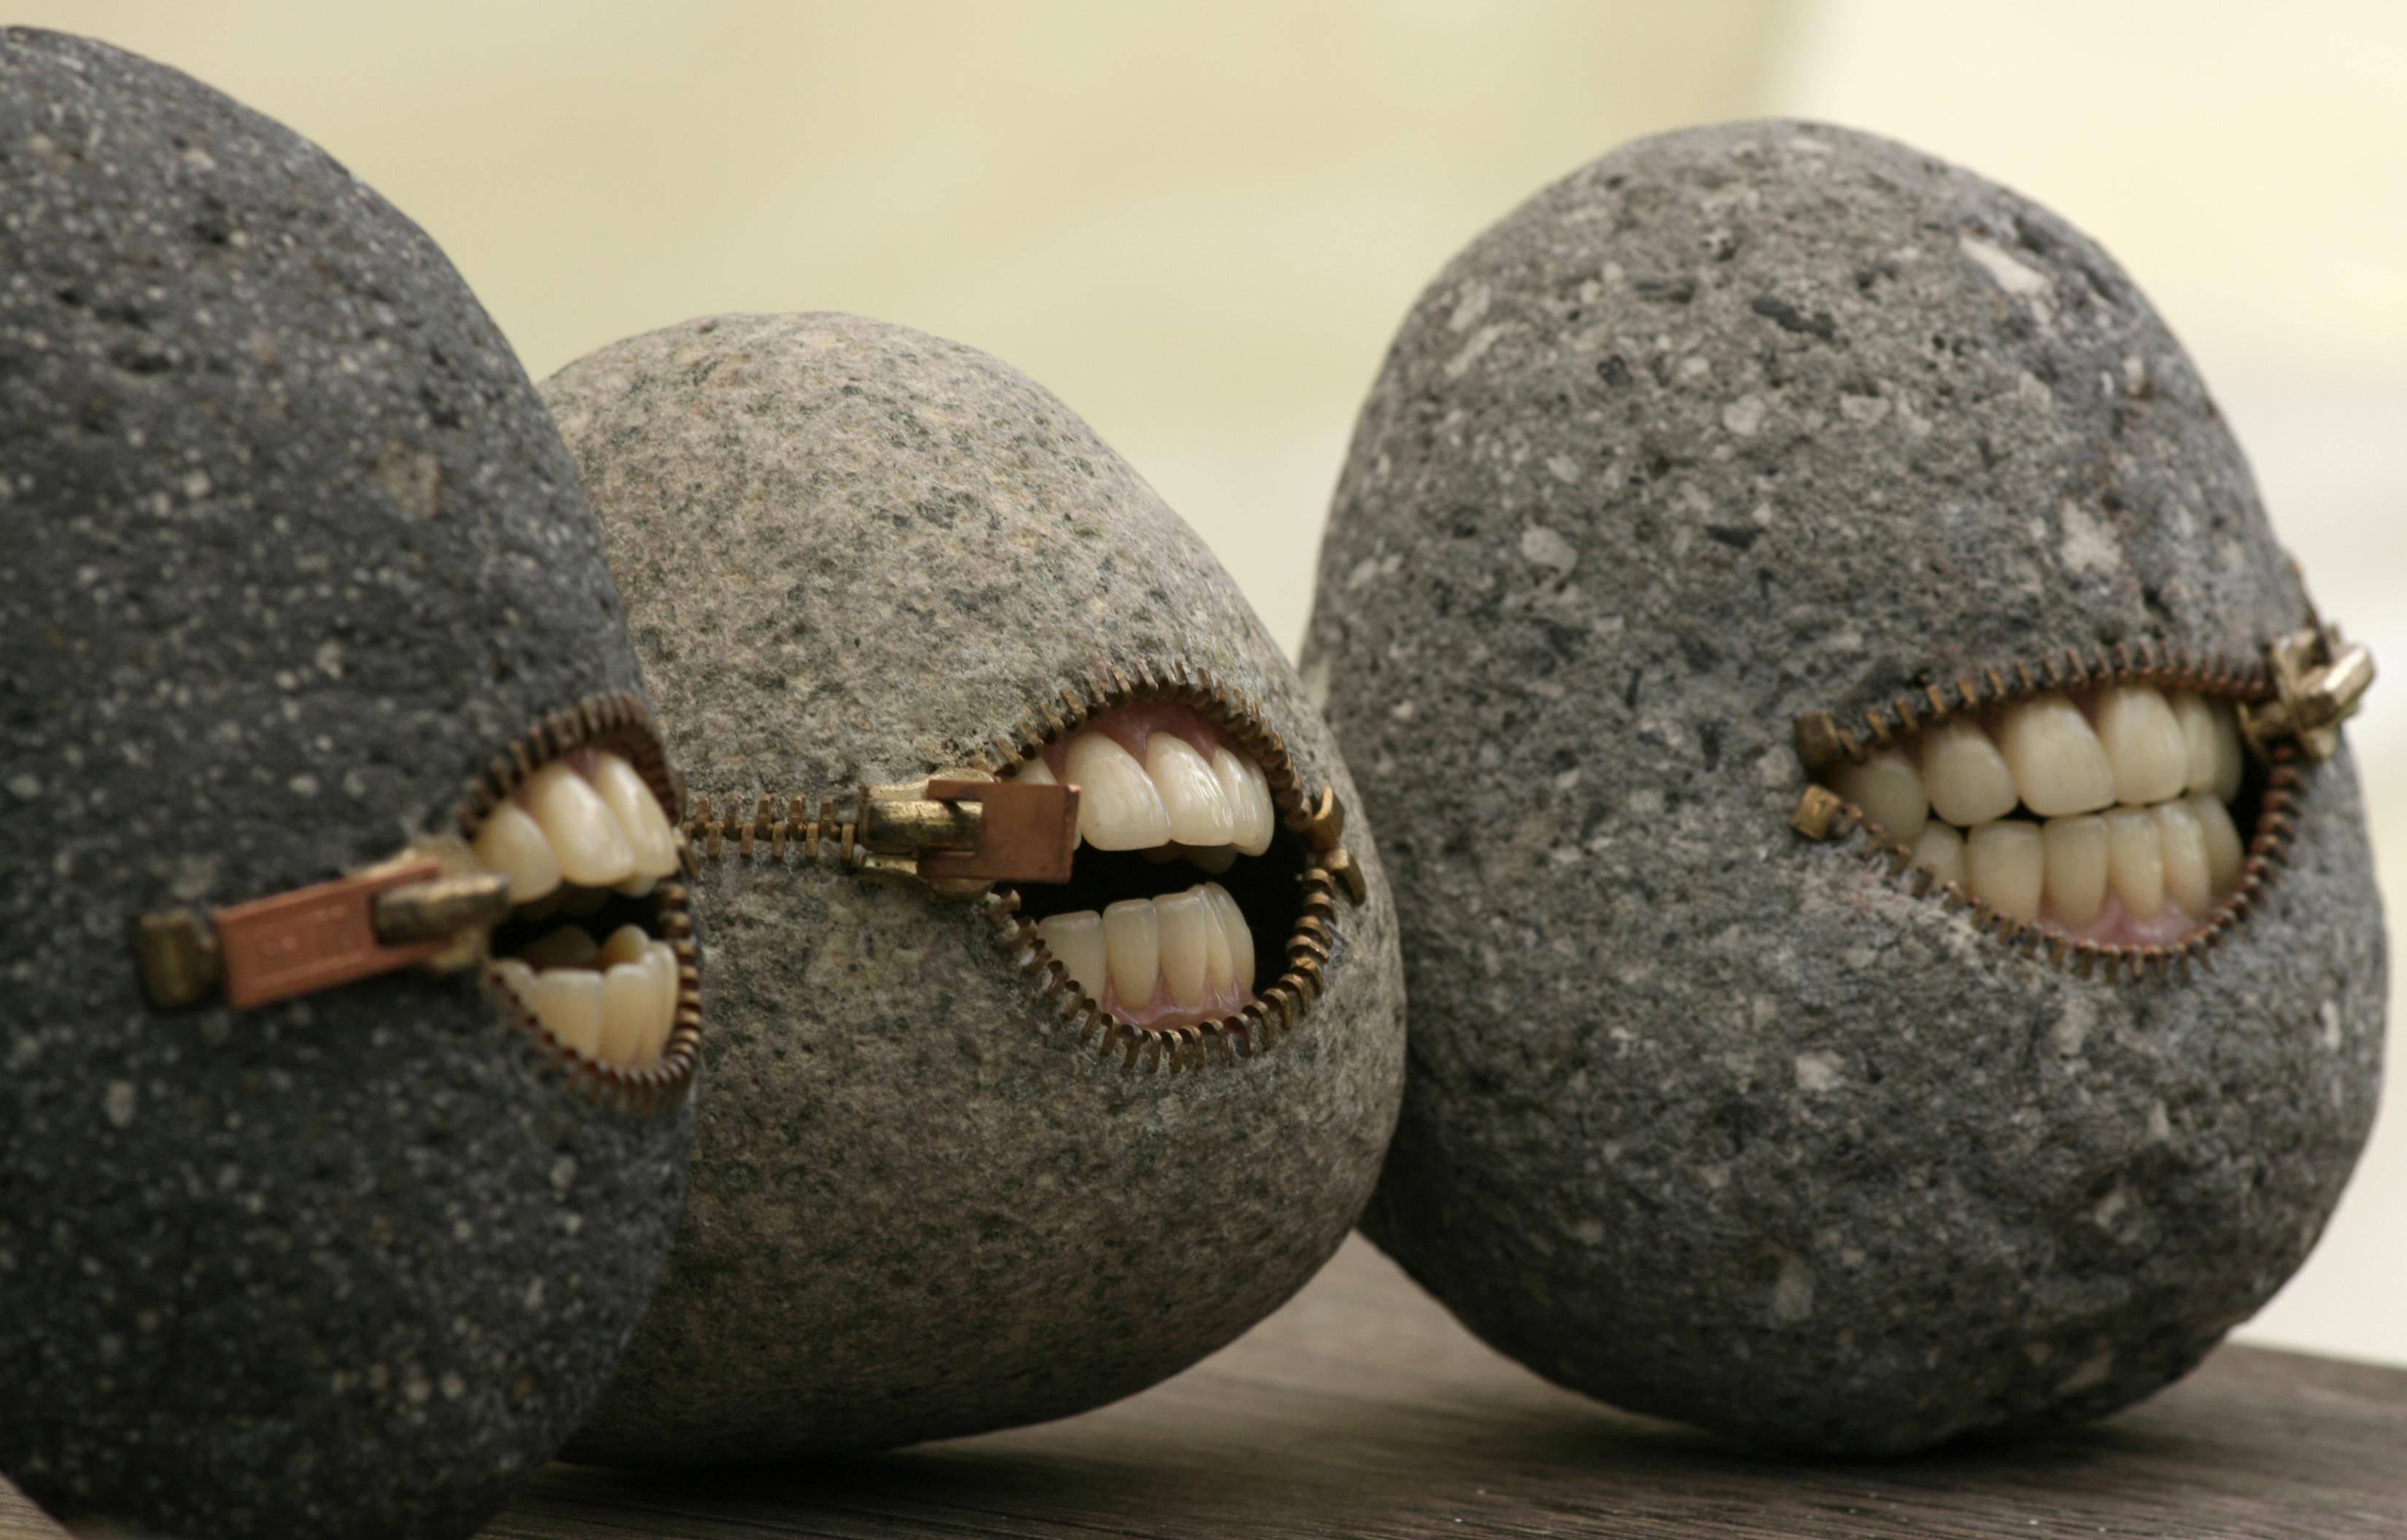 General 3300x2112 rocks stones humor minimalism photo manipulation creepy teeth smiling zipper